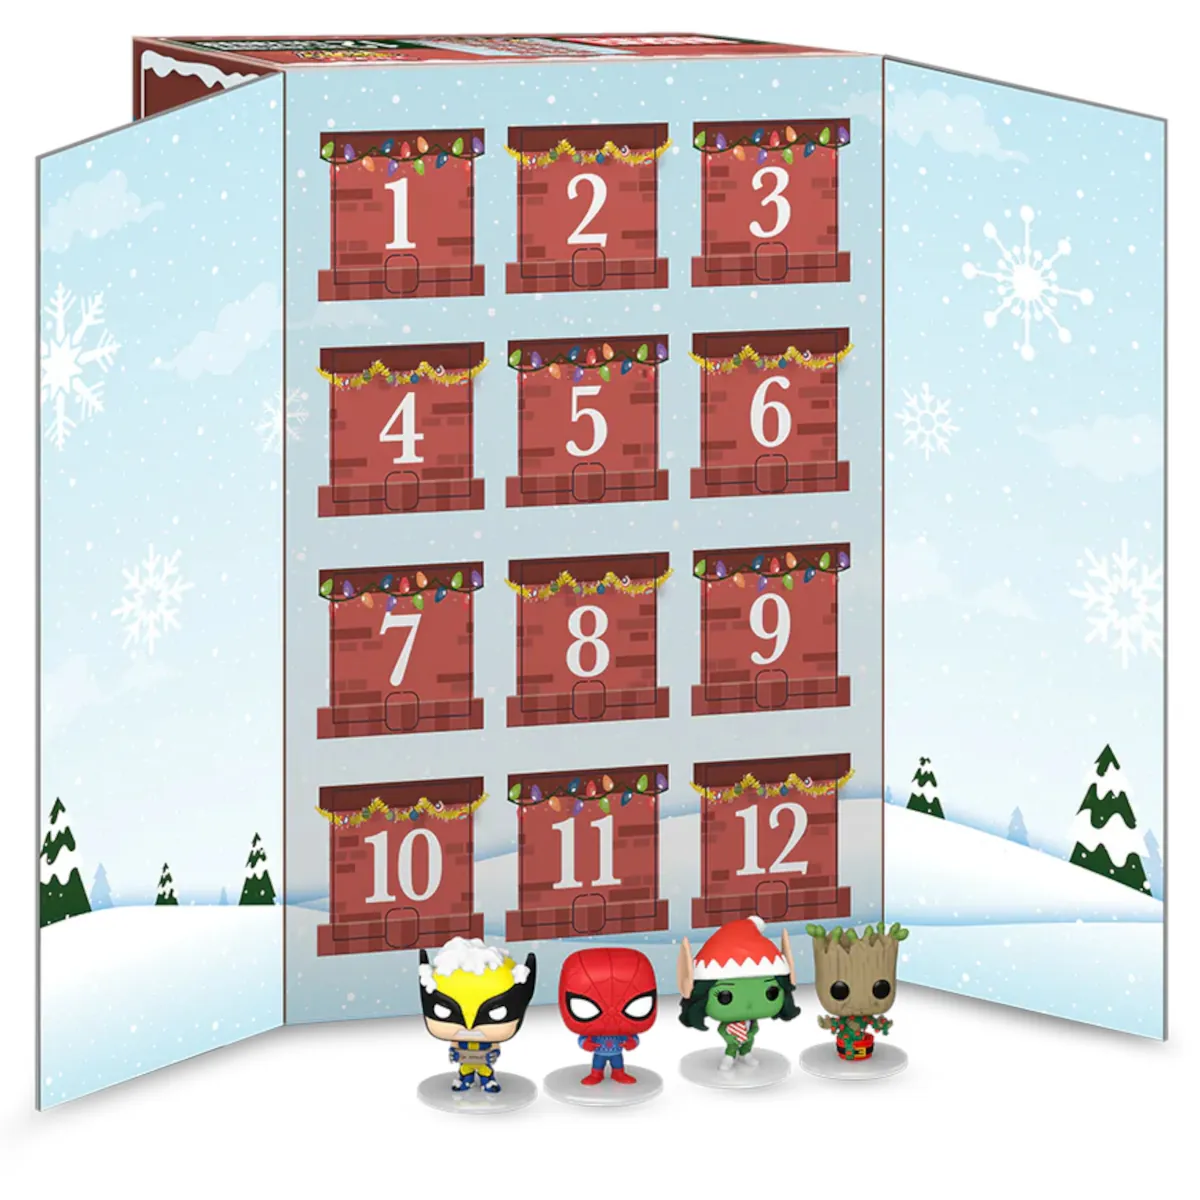 80990 Funko Pocket Pop! - Marvel - 12 Day Countdown Calendar Collectable Vinyl Figures Open